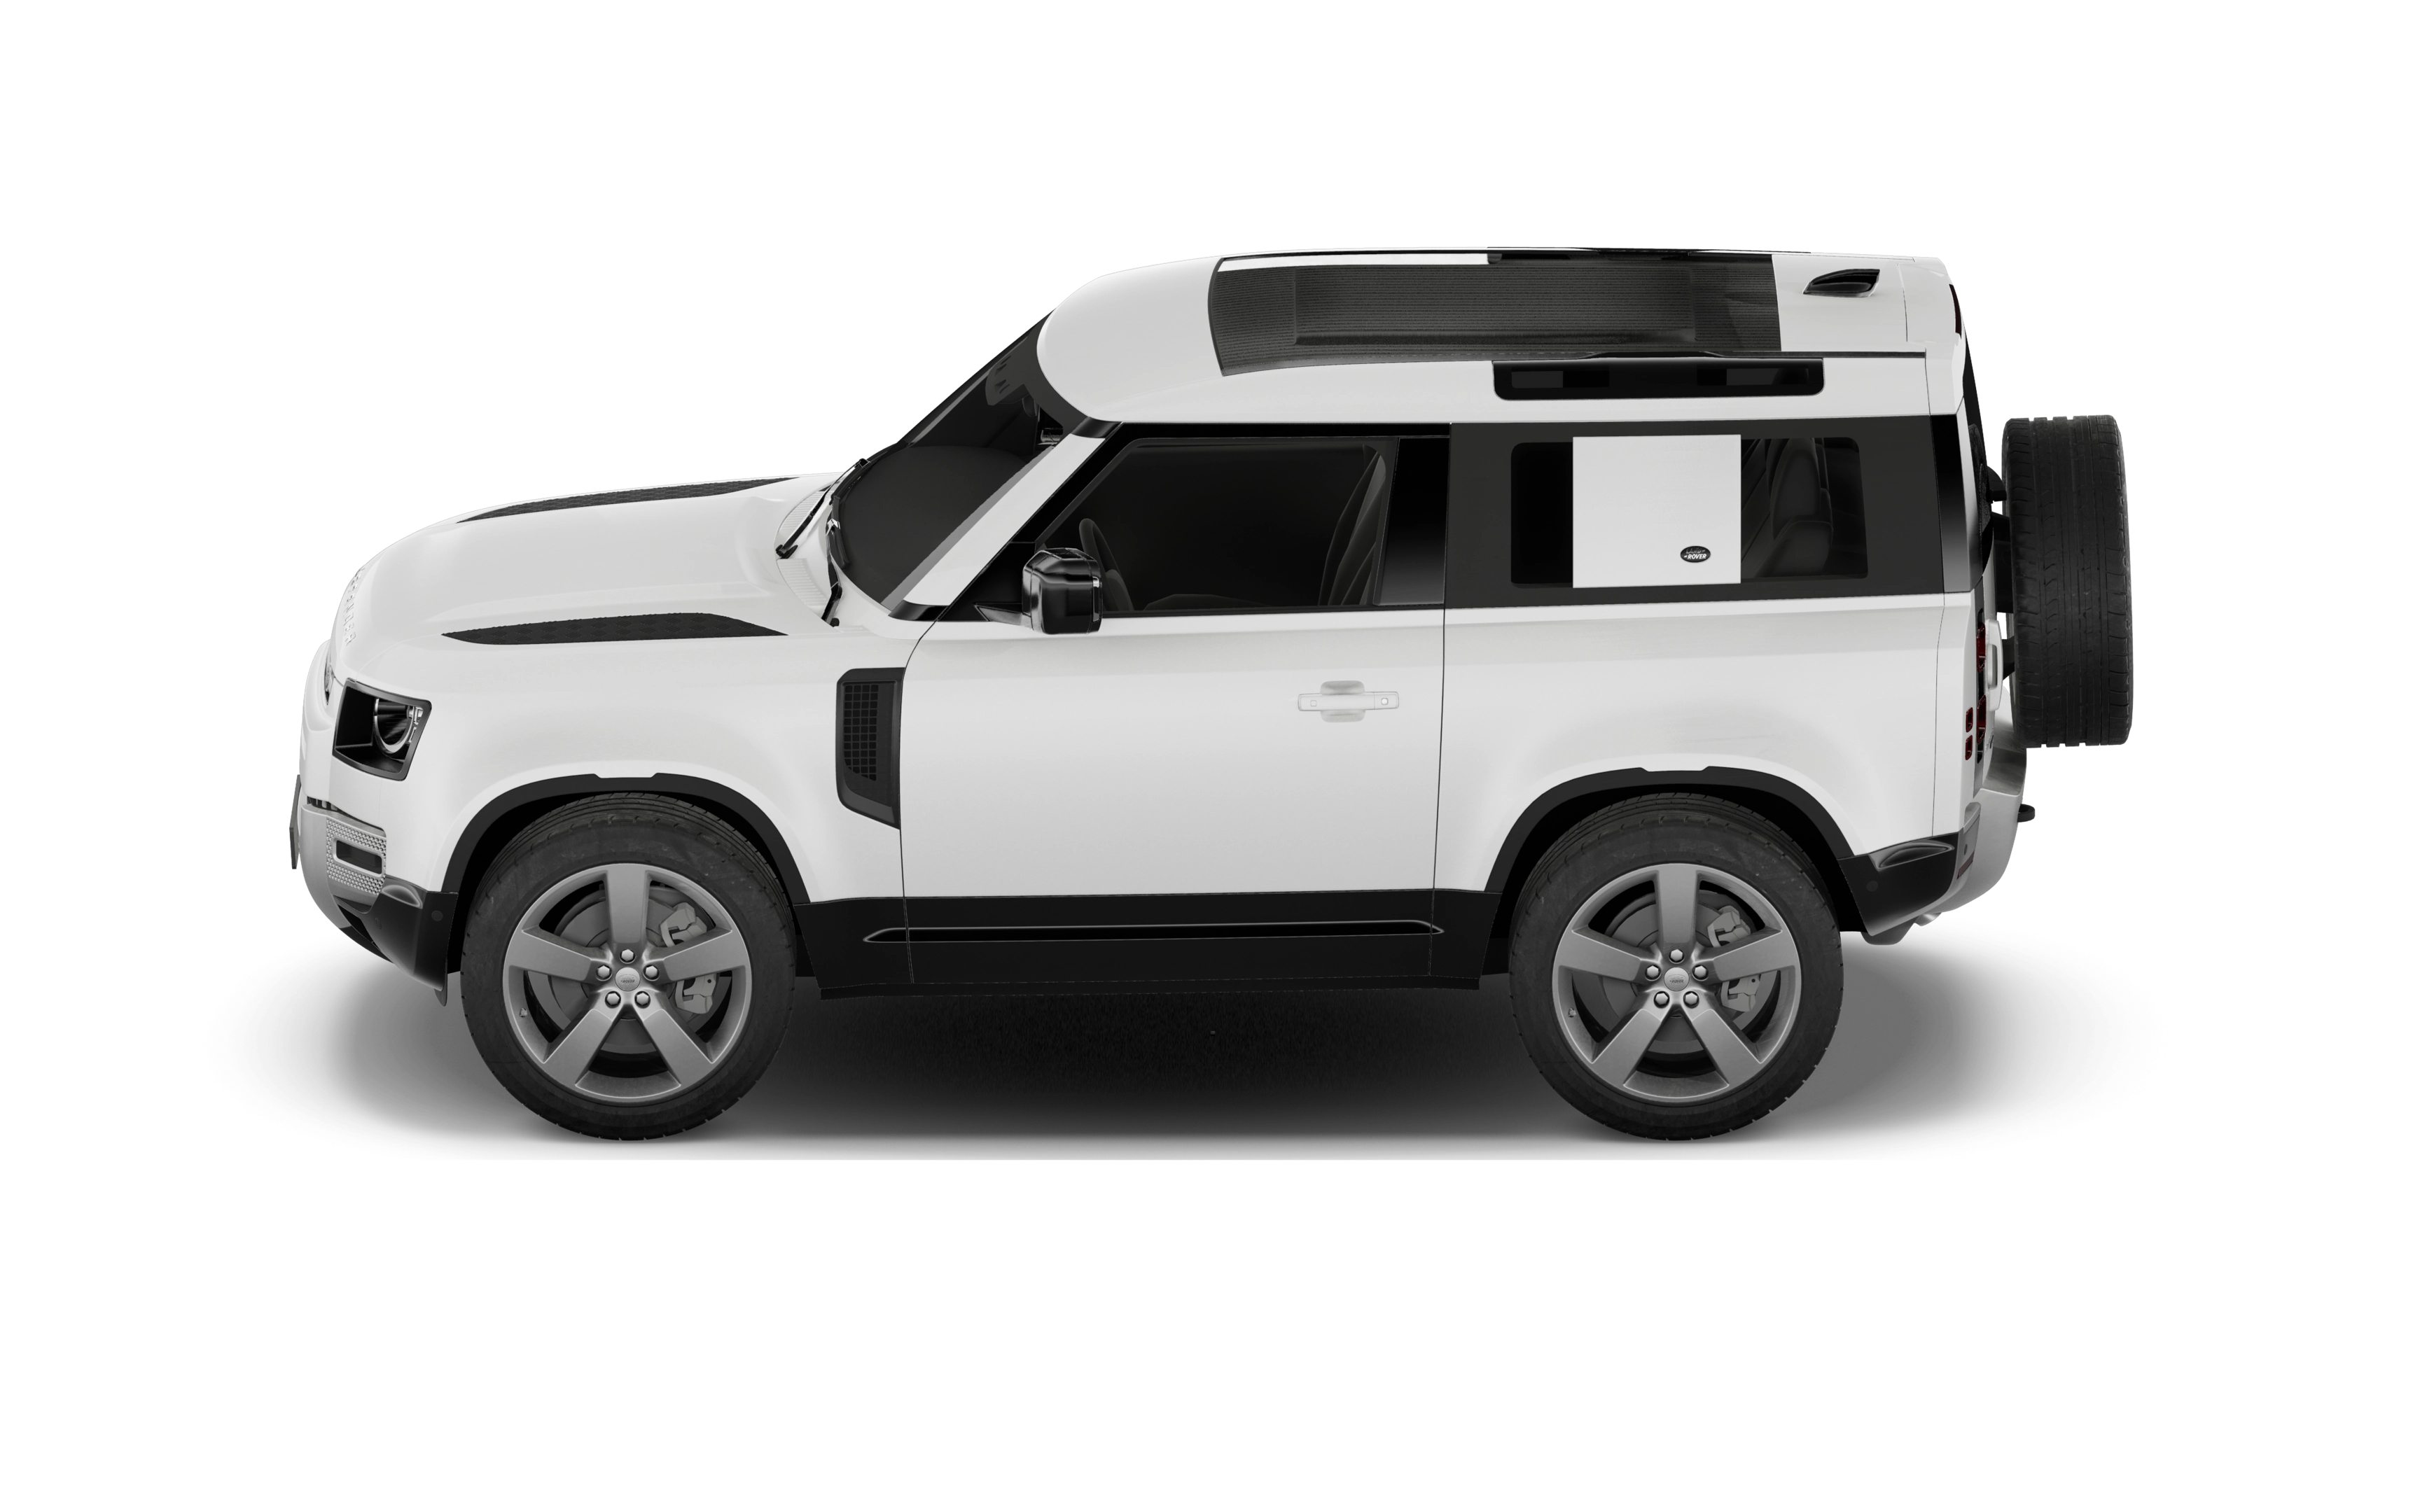 Land rover defender estate 3.0 d250 hse 110 5 doors auto [6 seat]